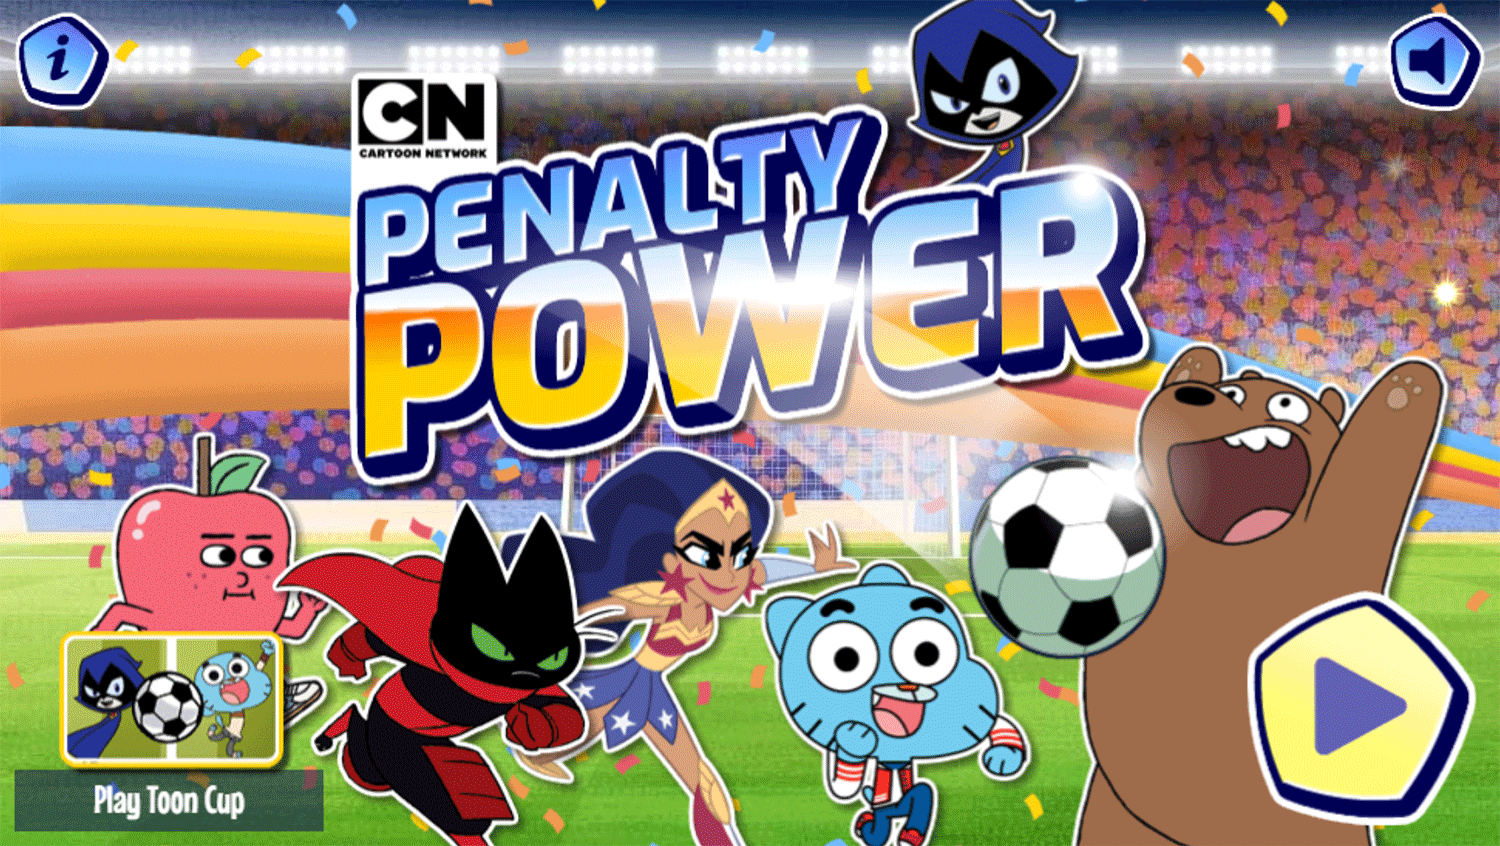 Penalty Power Game Welcome Screen Screenshot.